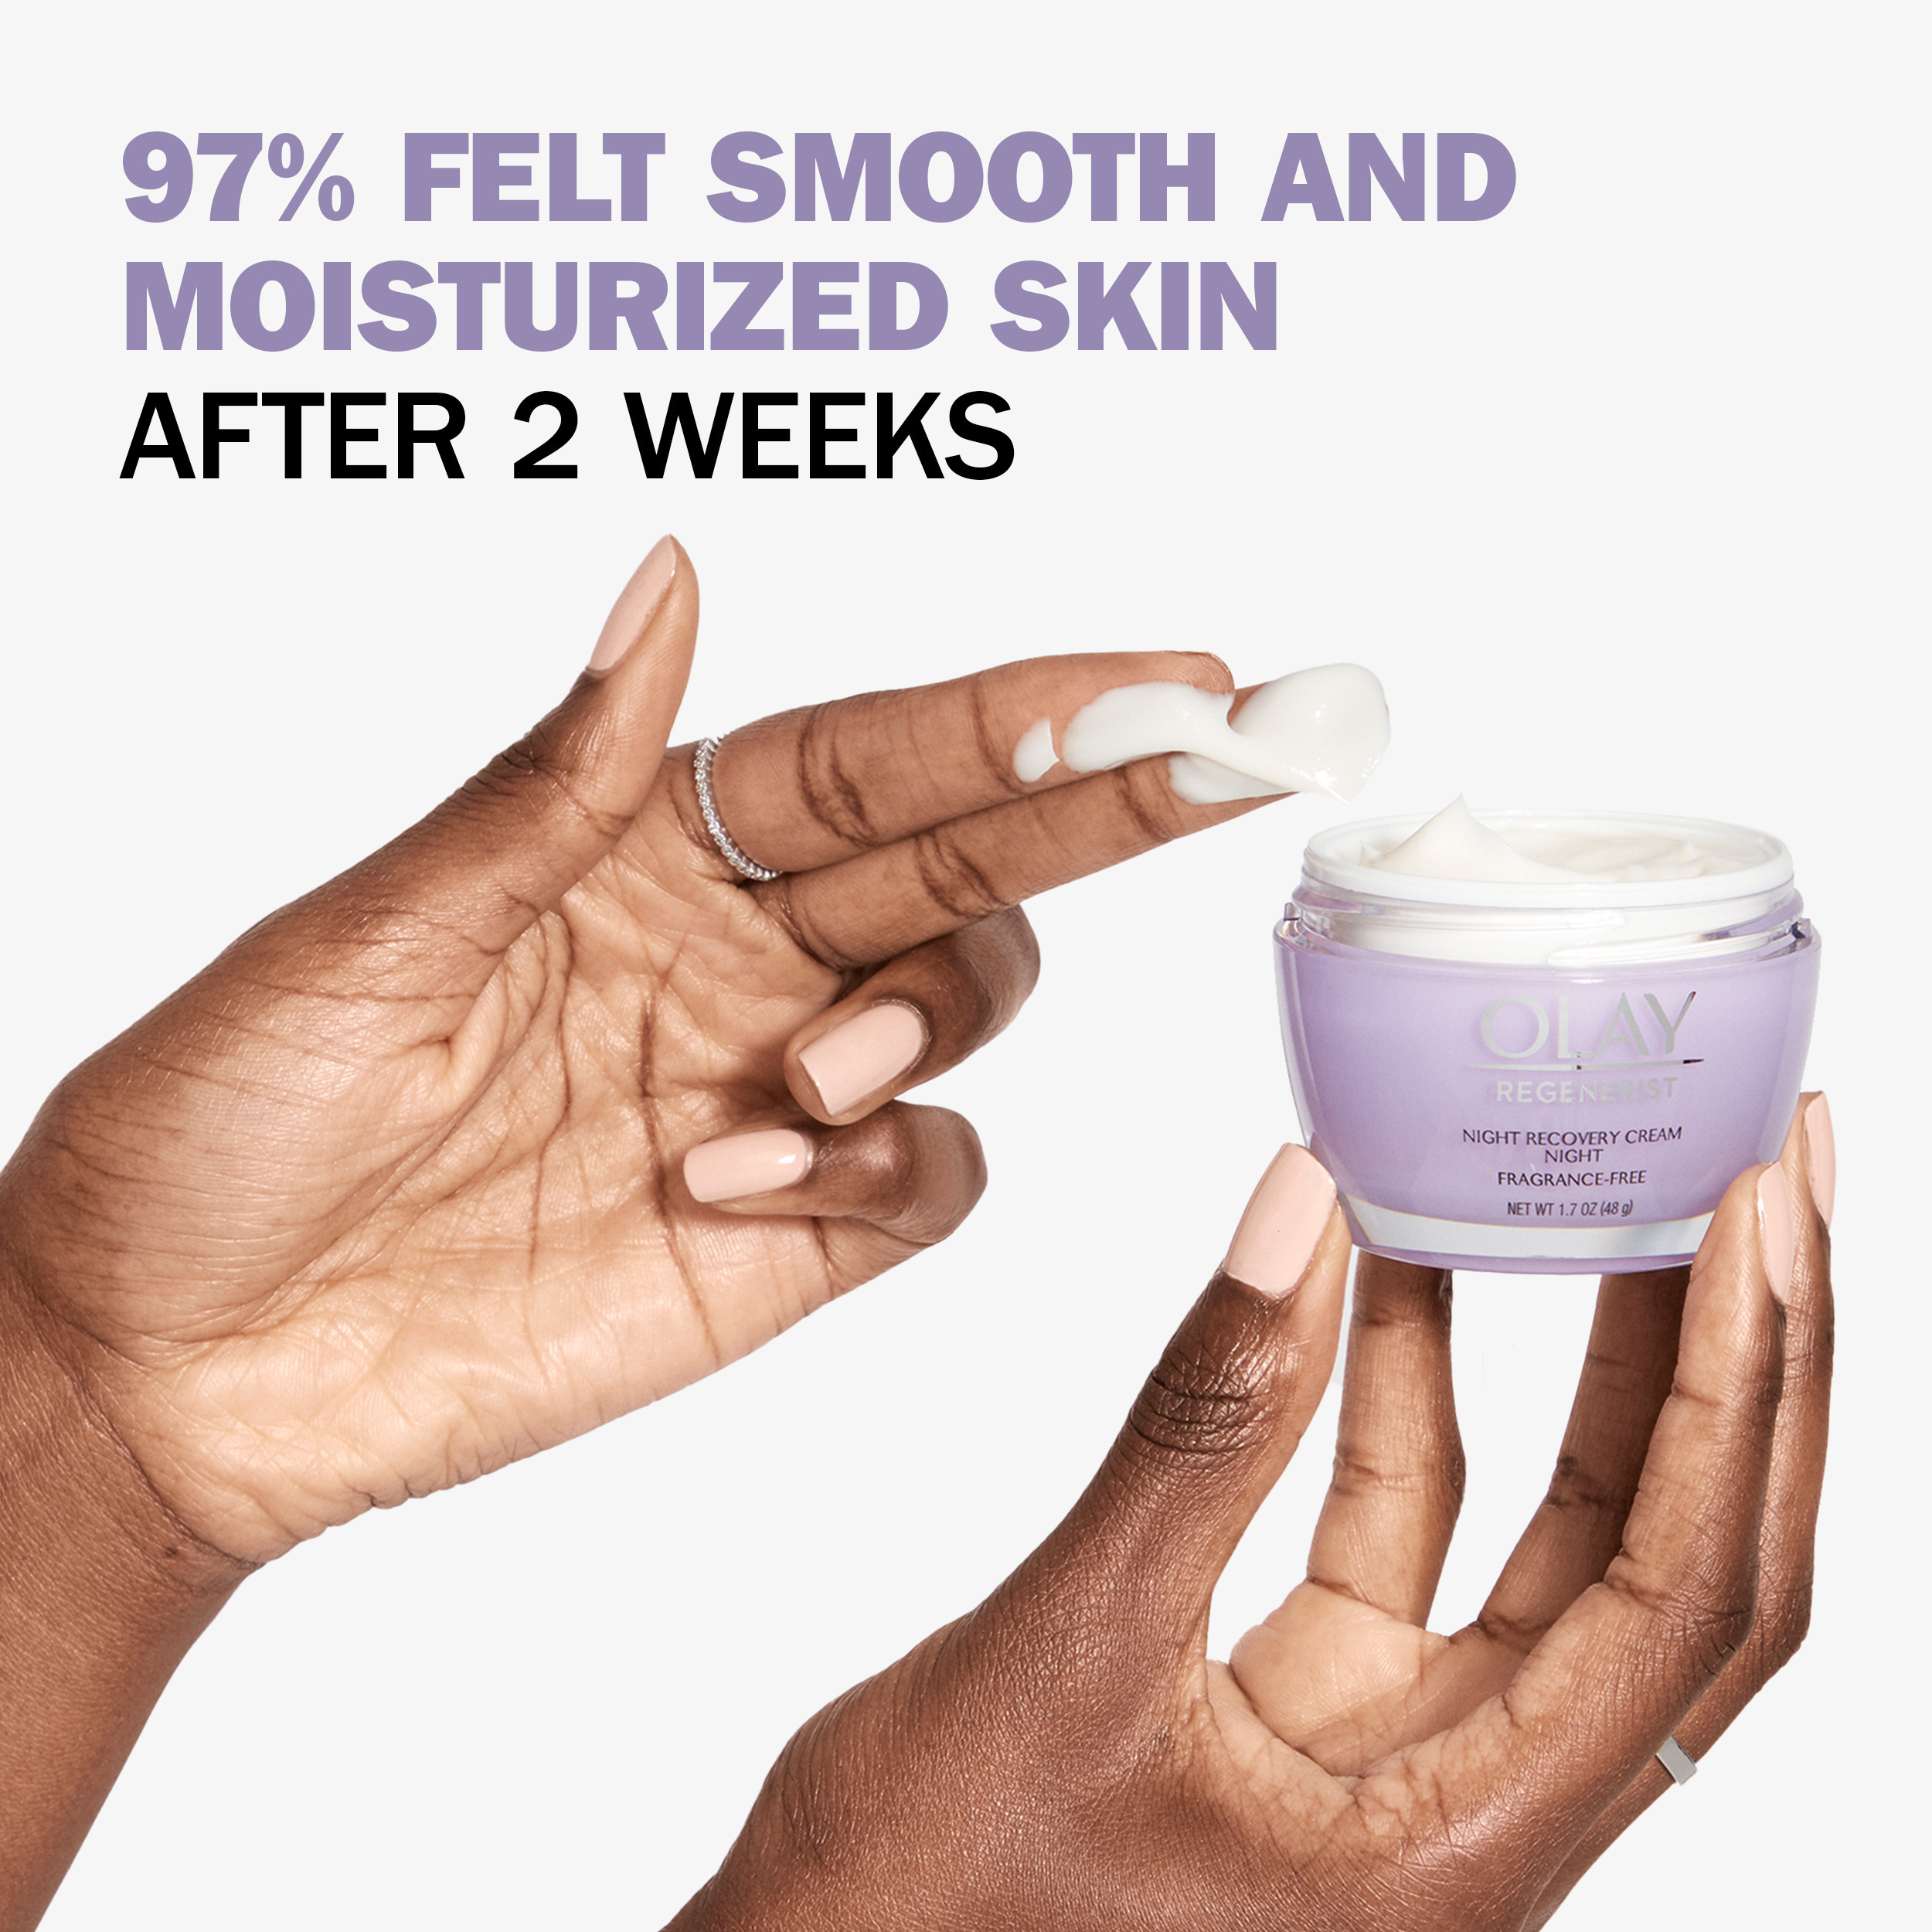 Olay Skincare Regenerist Night Recovery Anti-Aging Cream Facial Moisturizer Fragrance Free 1.7 fl oz - image 3 of 11